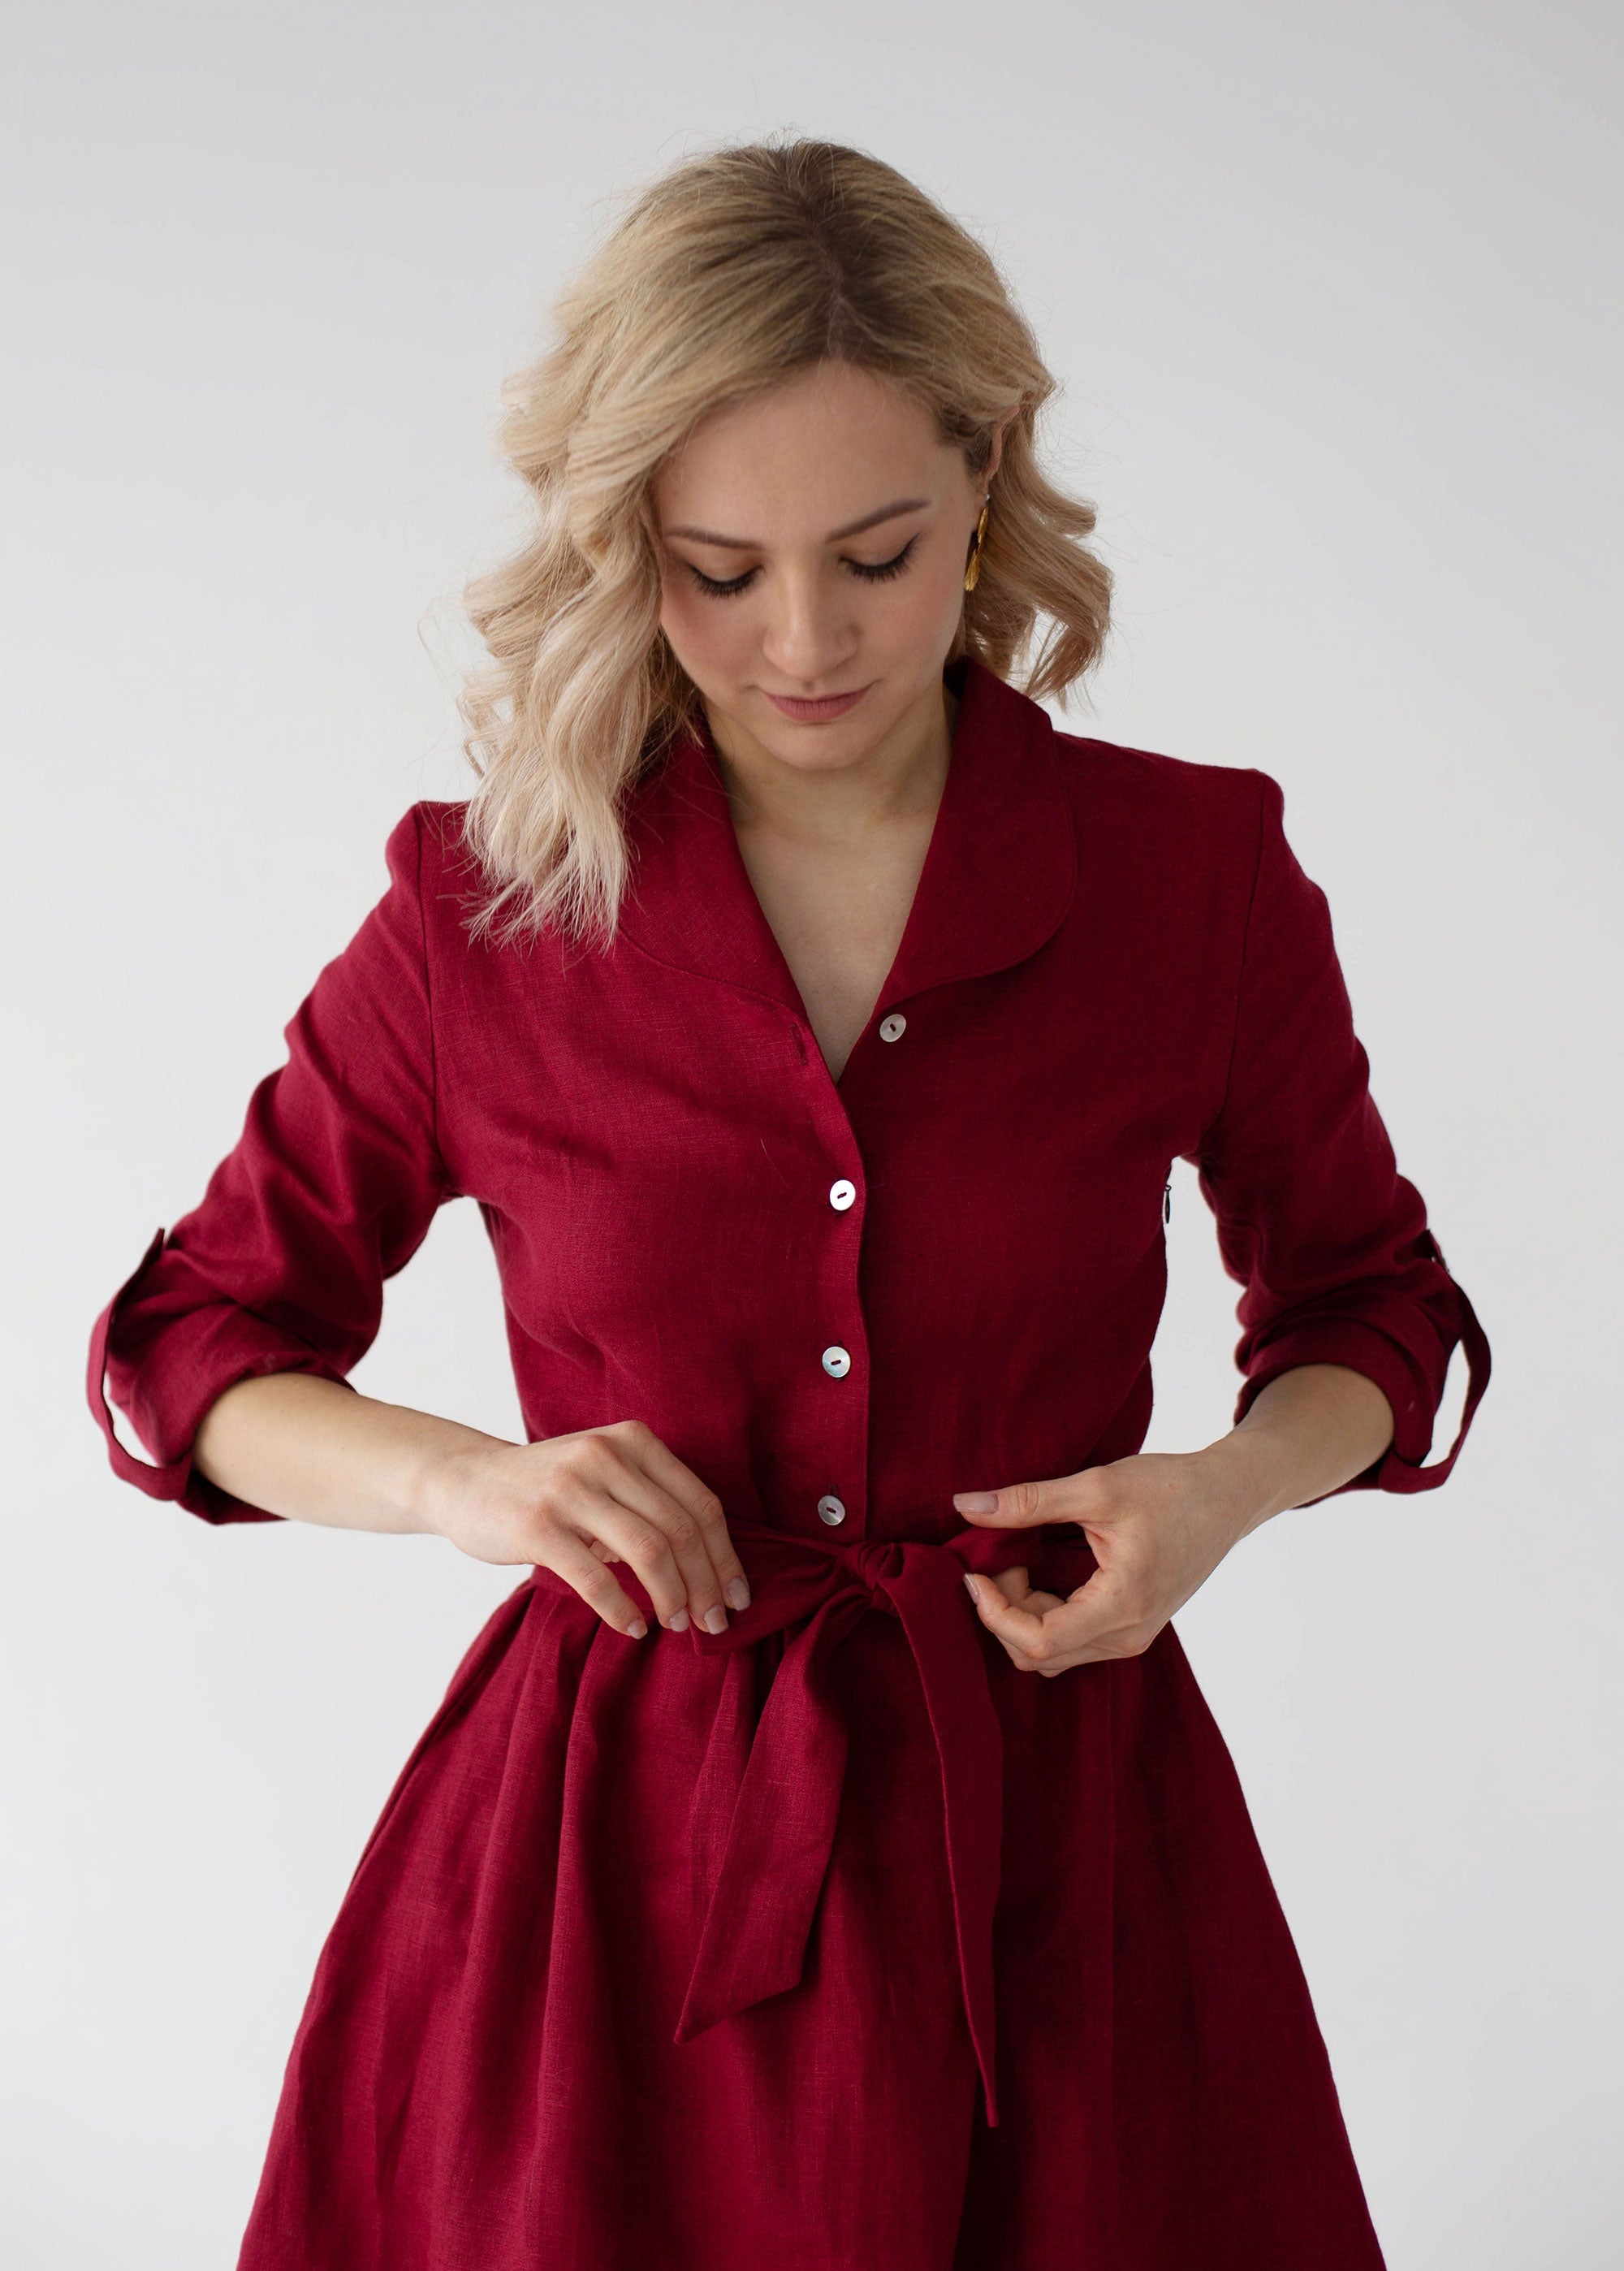 XS size "Lily" Burgundy Button Front Linen Dress